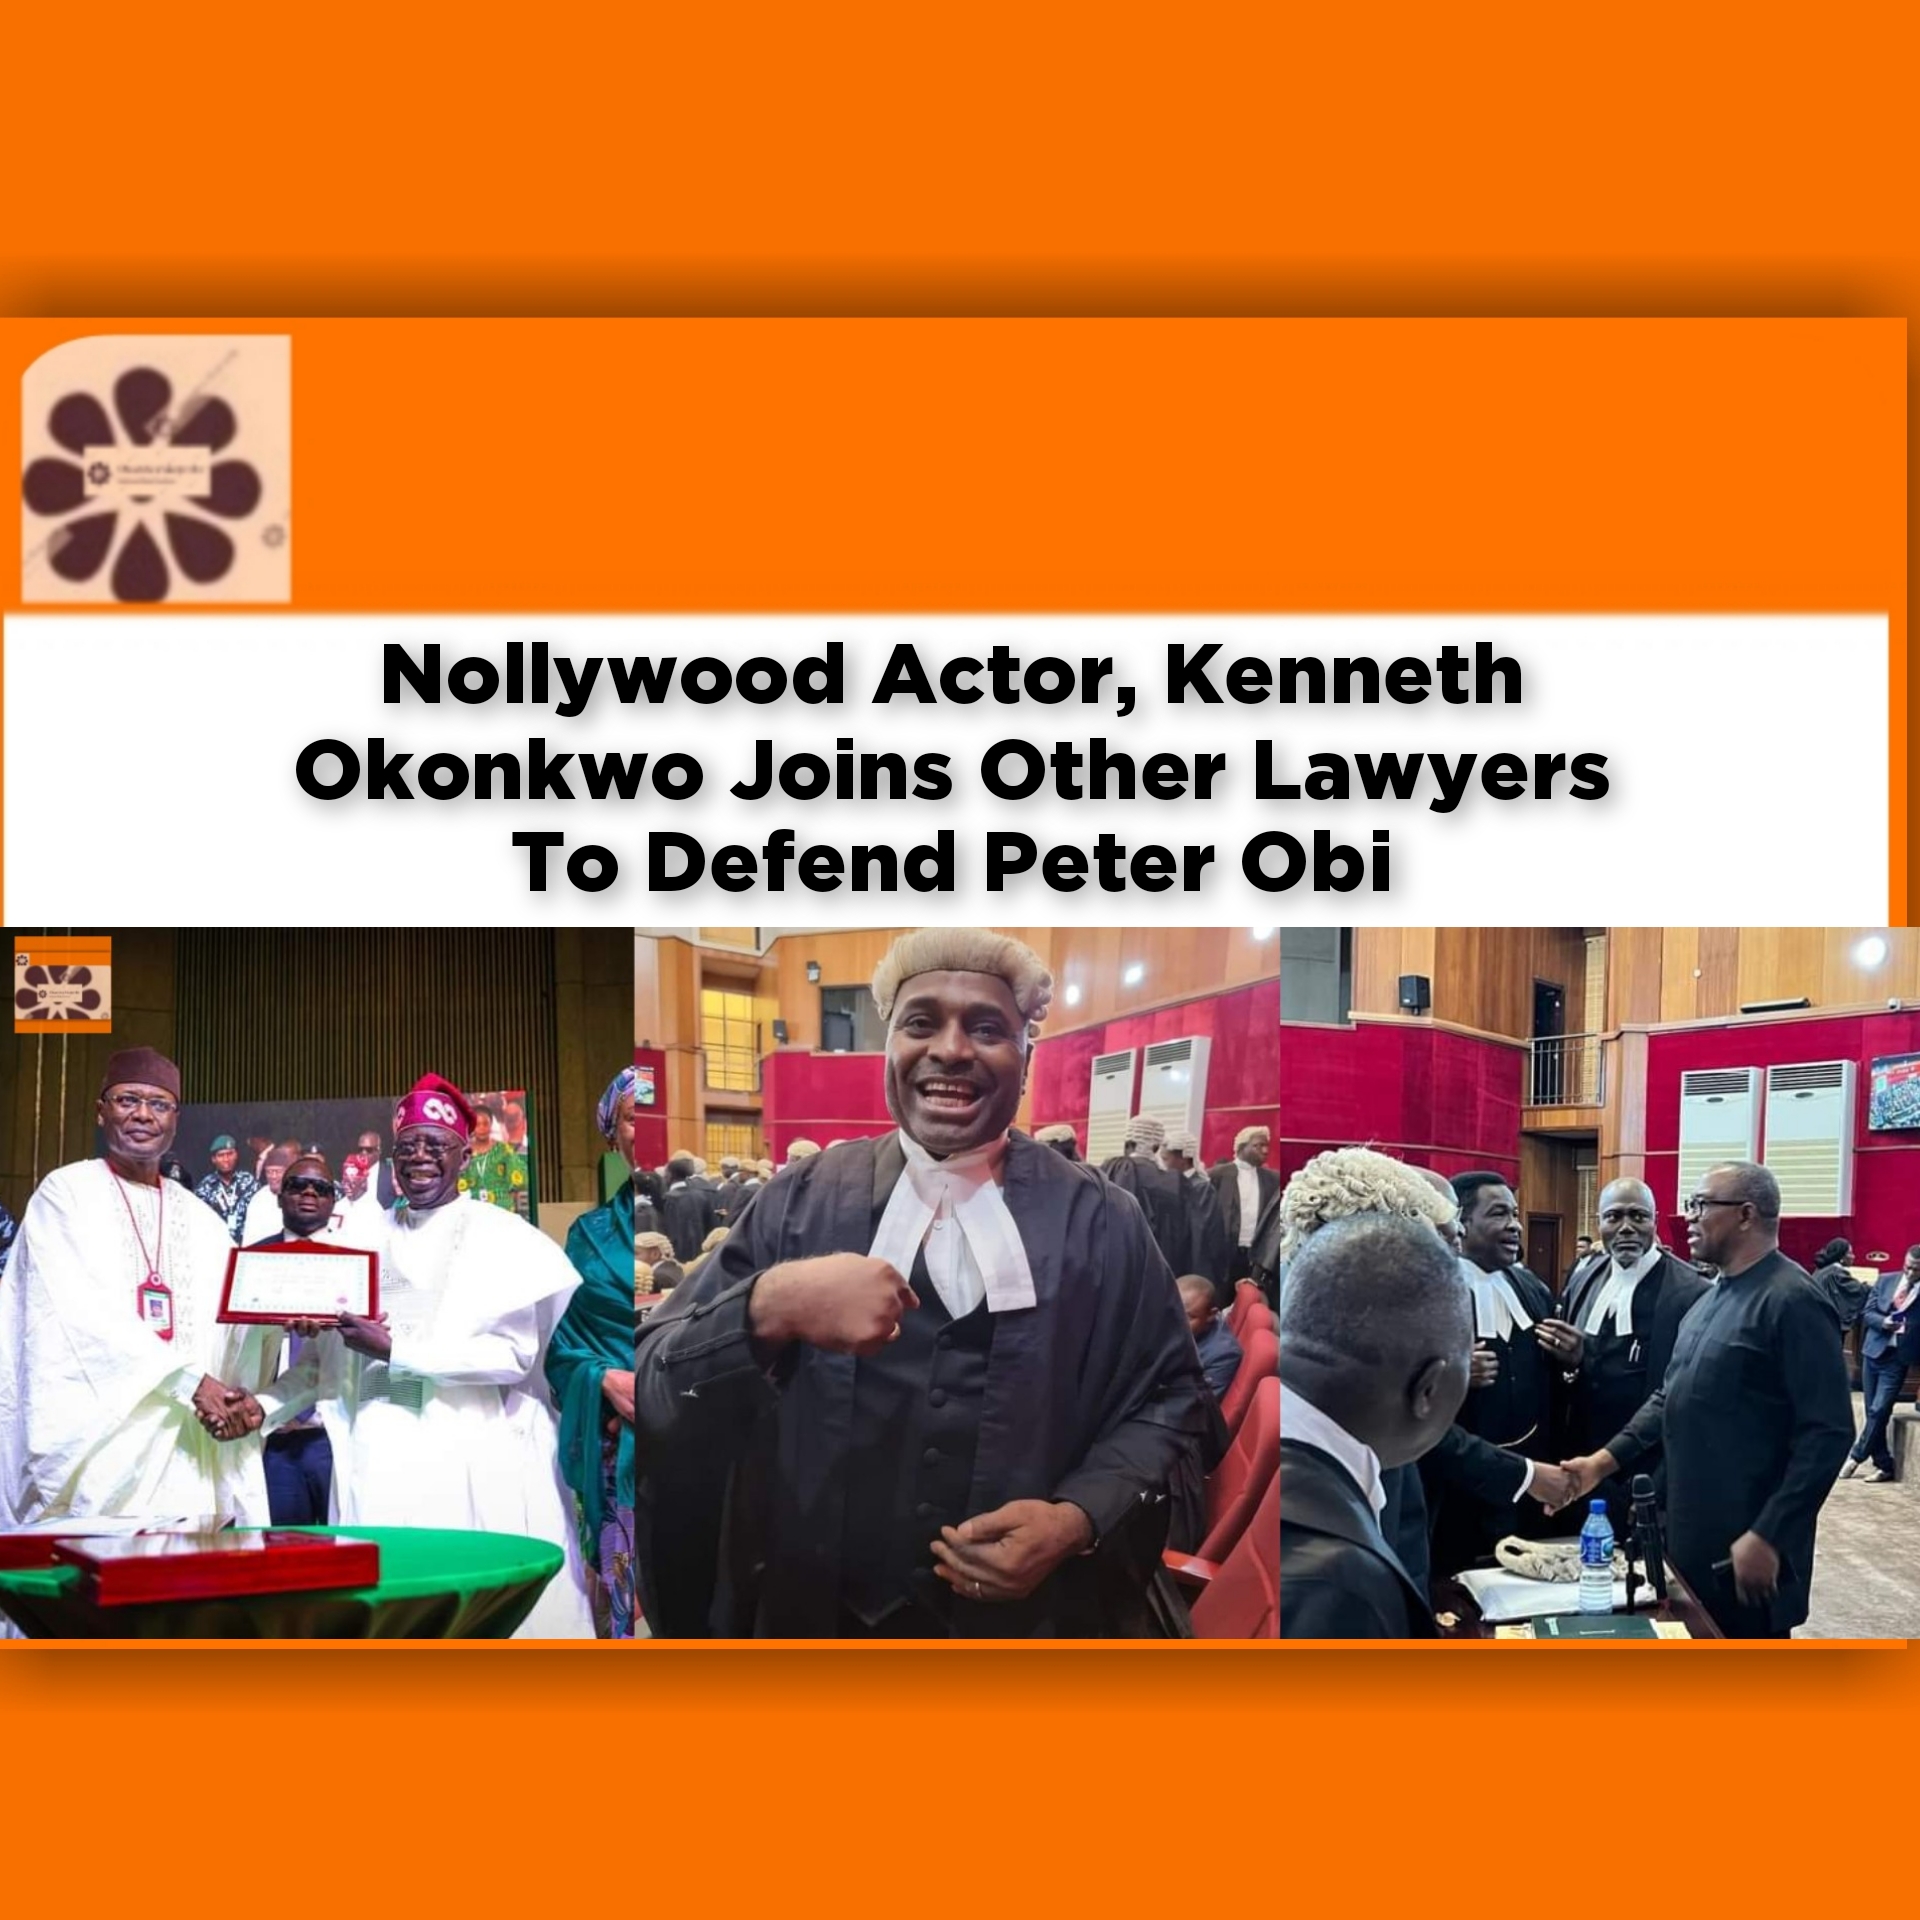 Nollywood Actor, Kenneth Okonkwo Joins Other Lawyers To Defend Peter Obi ~ OsazuwaAkonedo ###LP #2023Election #Abubakar #Ahmed #APC #Atiku #Bola #Kenneth #lawyers #Nollywood #Obi #Okonkwo #PDP #PEPT #Peter #politics #Tinubu #Tribunal